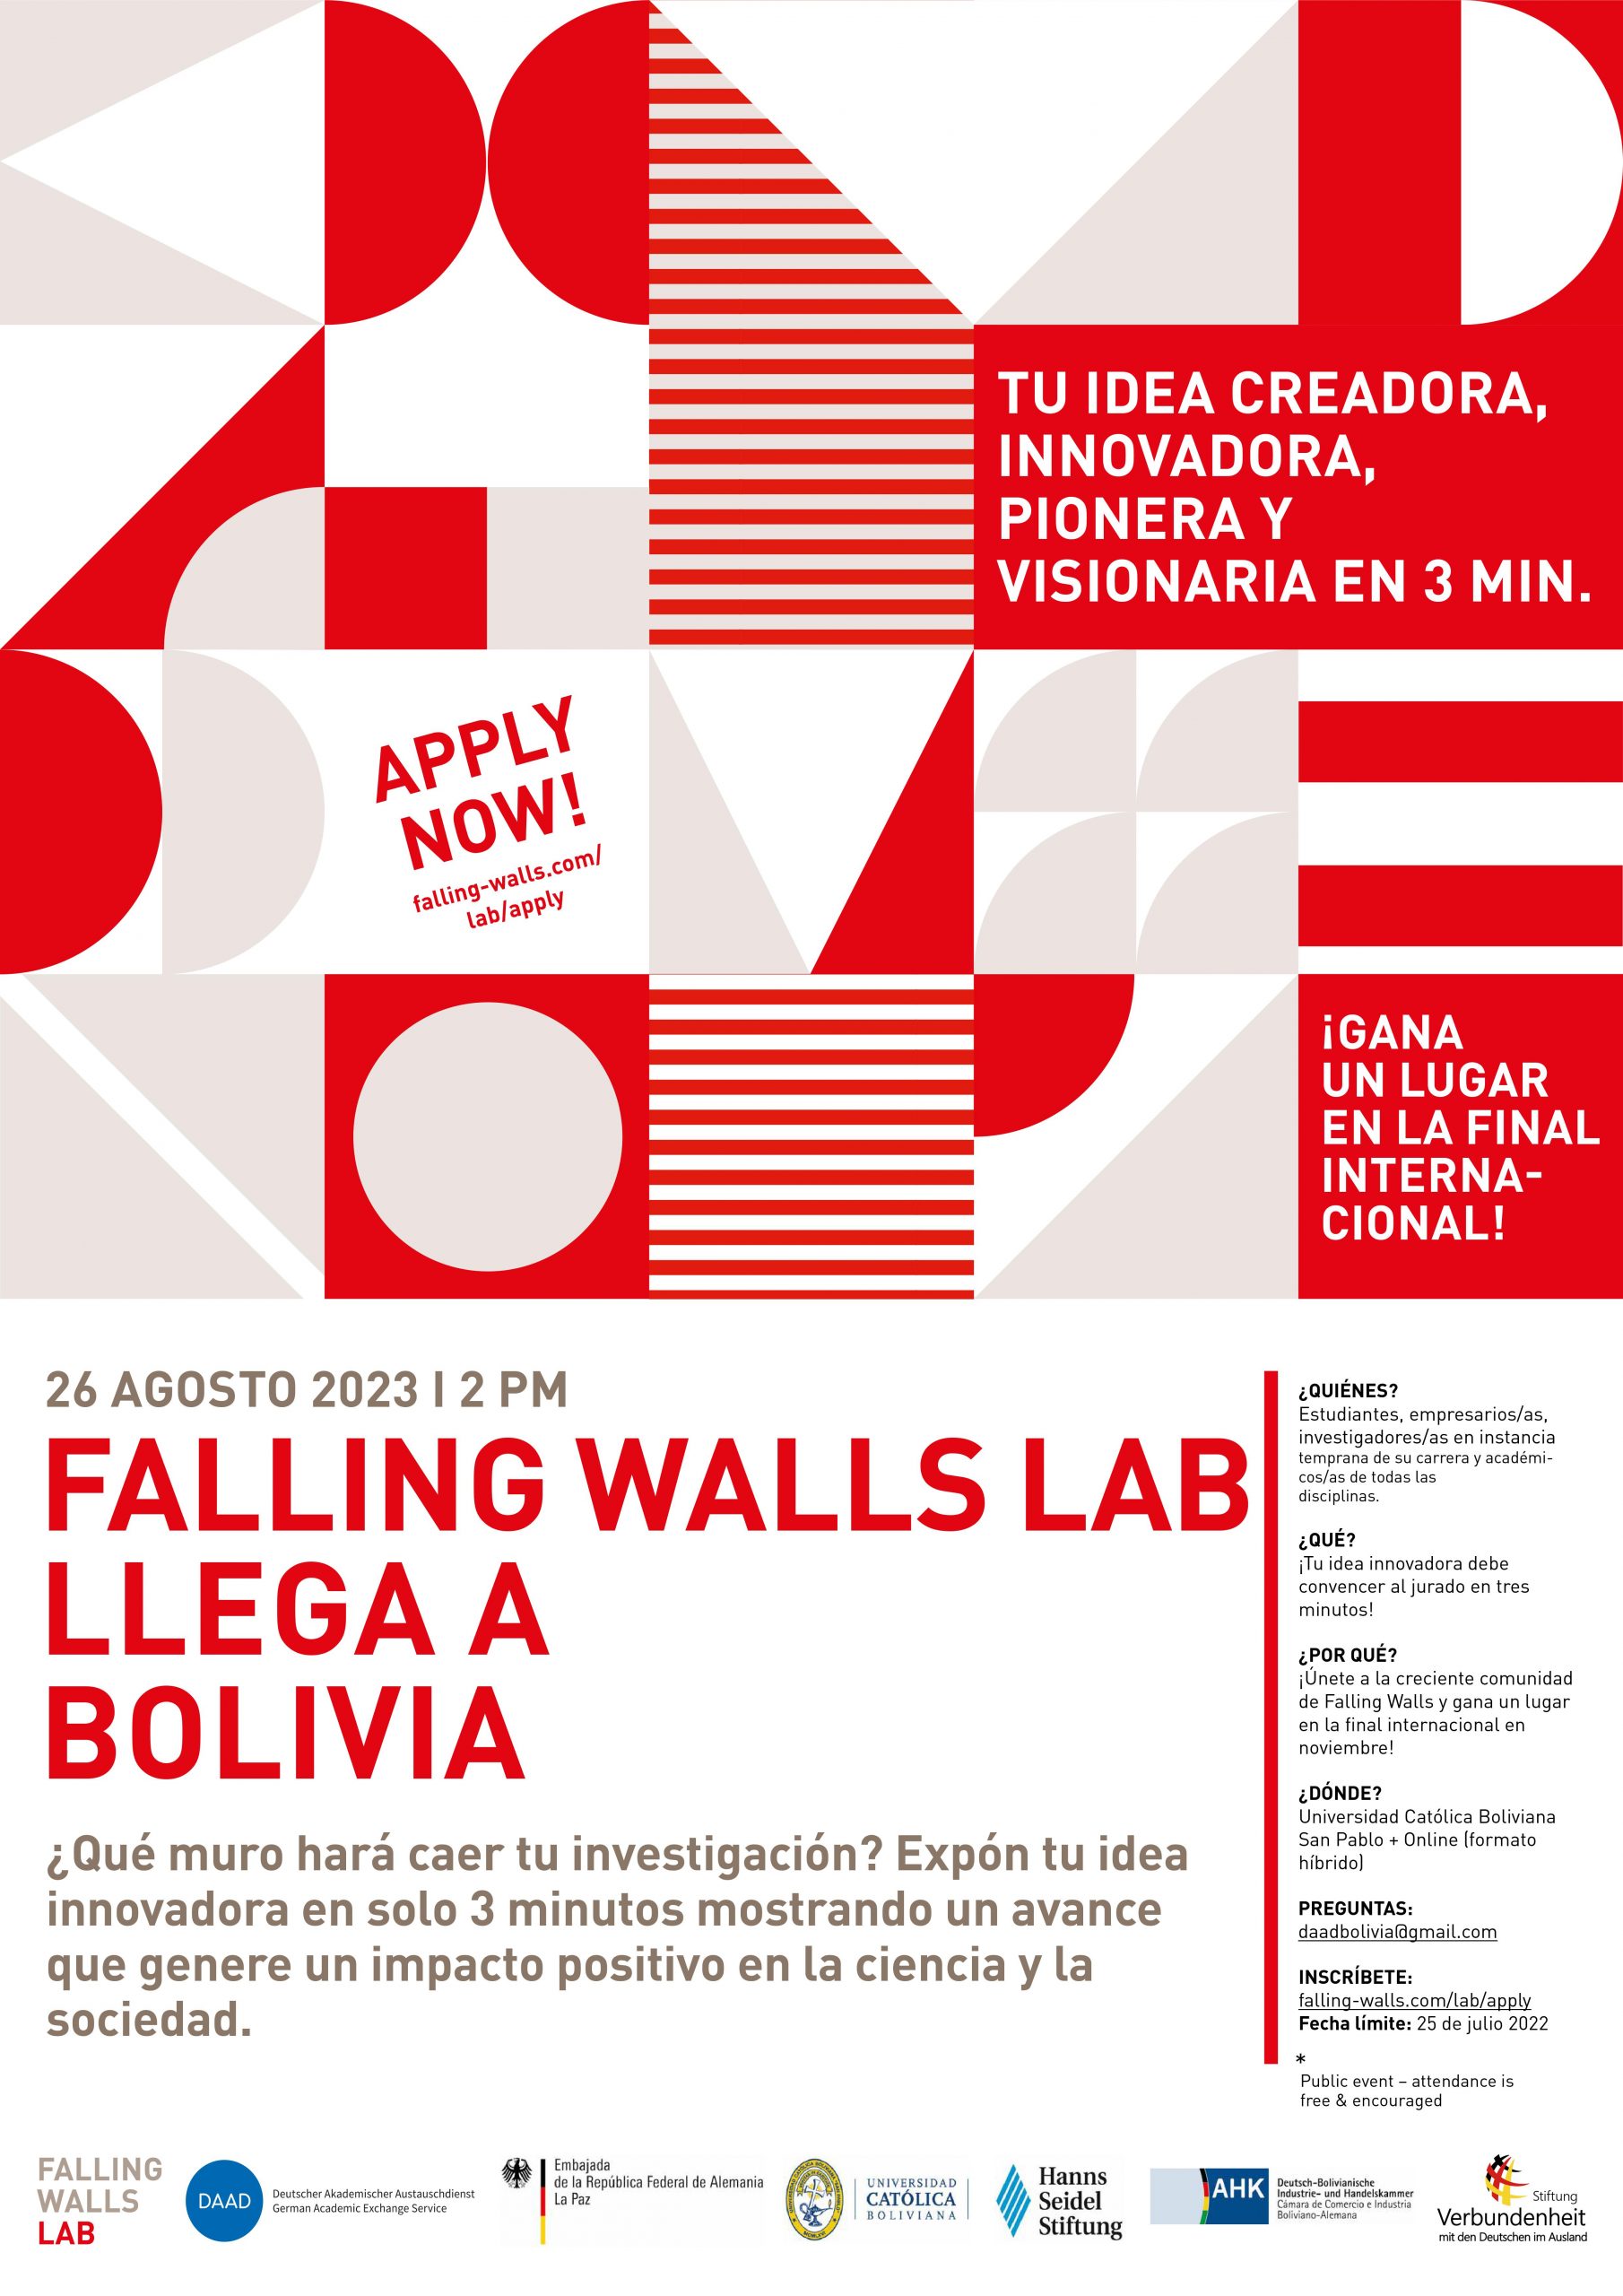 ++FALLING WALLS LAB BOLIVIA 2023++